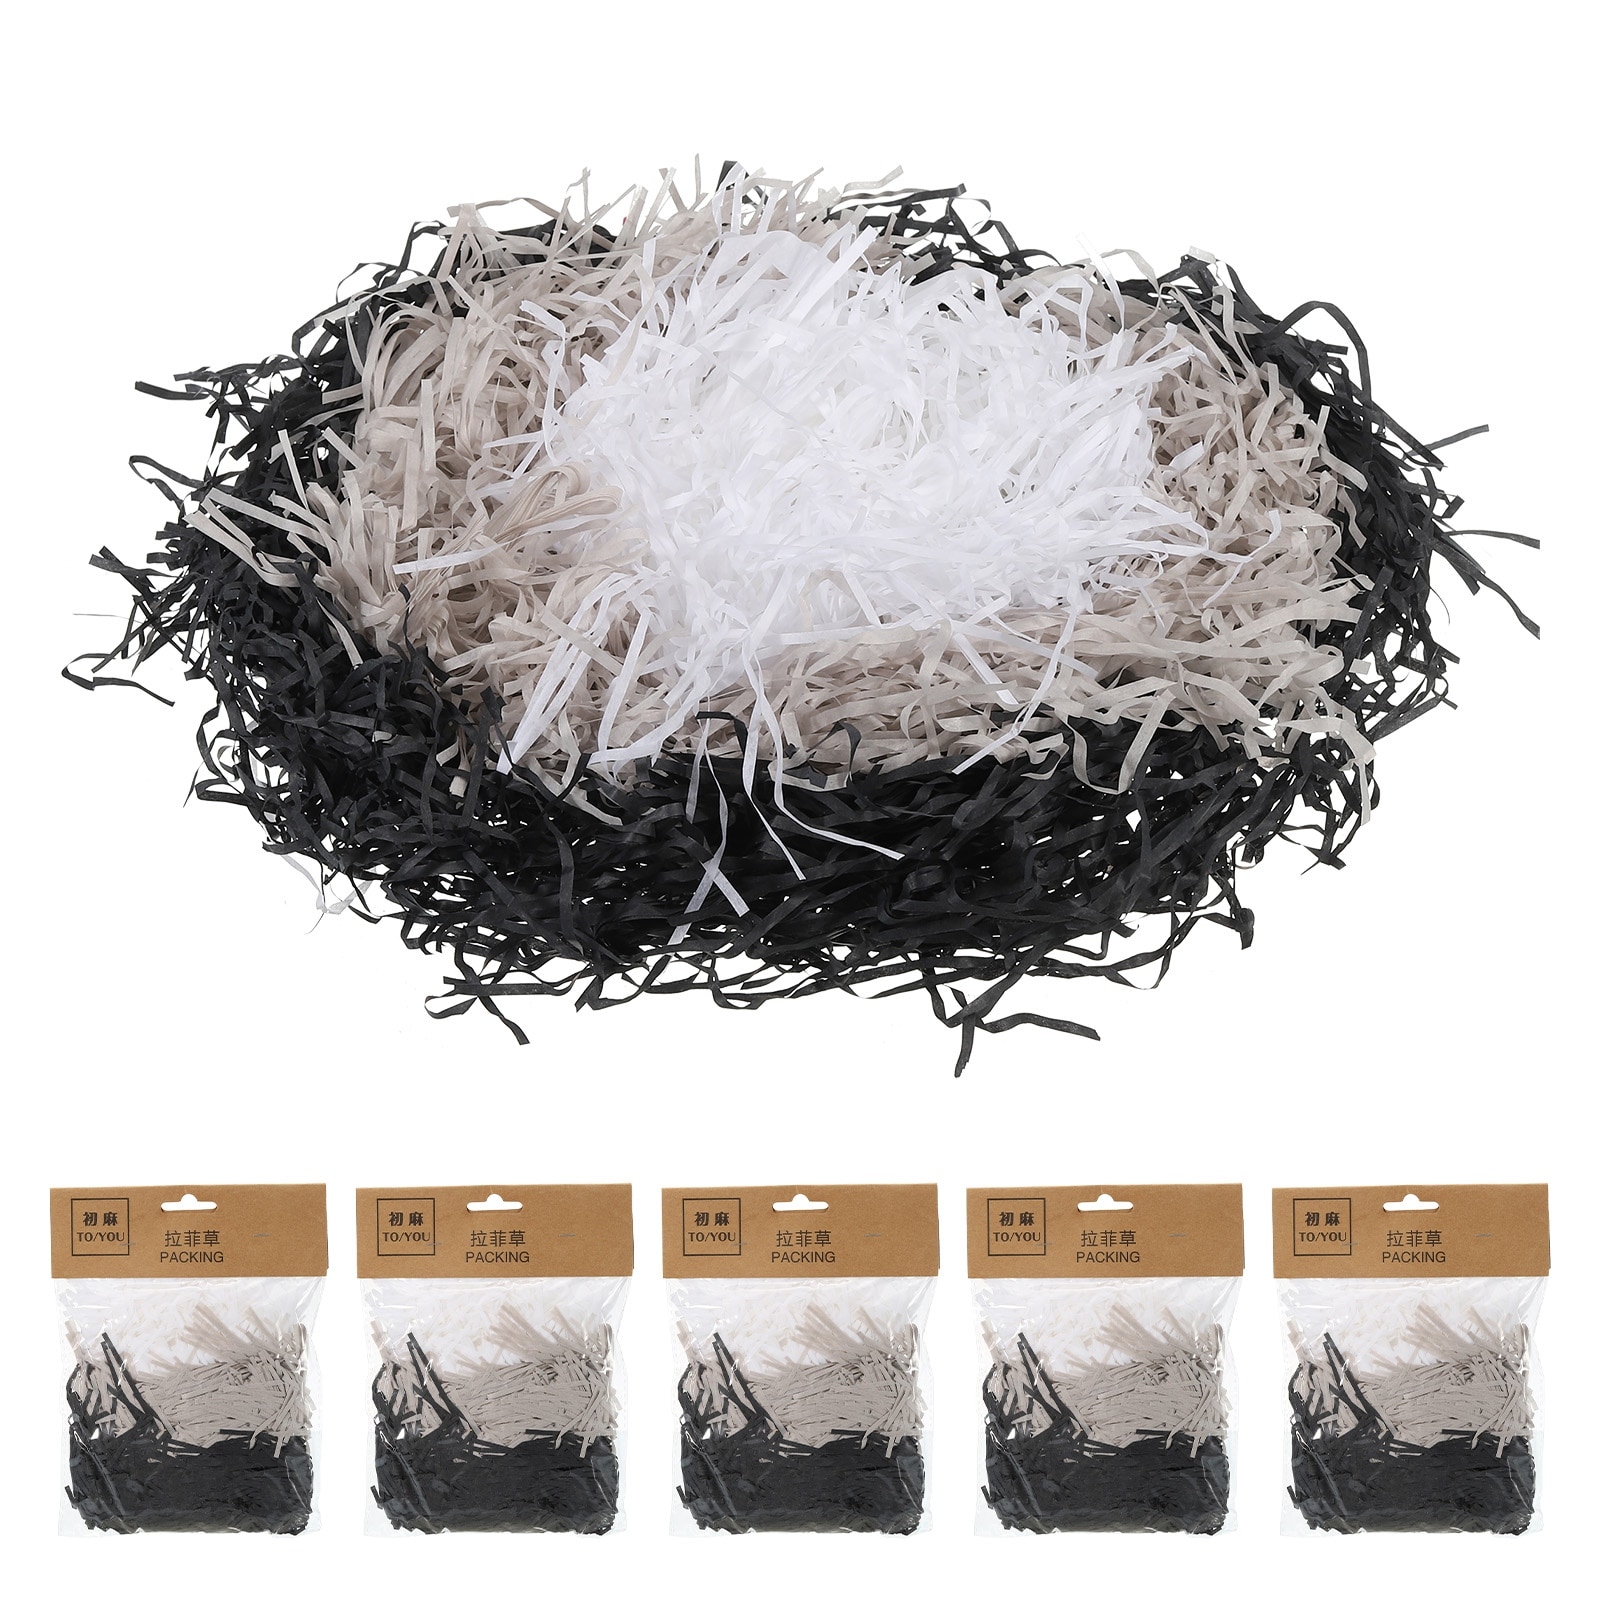 Easter Grass Basket Filler Grass 3 Color - (Black,White,Gray) - 5 Pack -  Black,White,Gray - Bed Bath & Beyond - 37625067